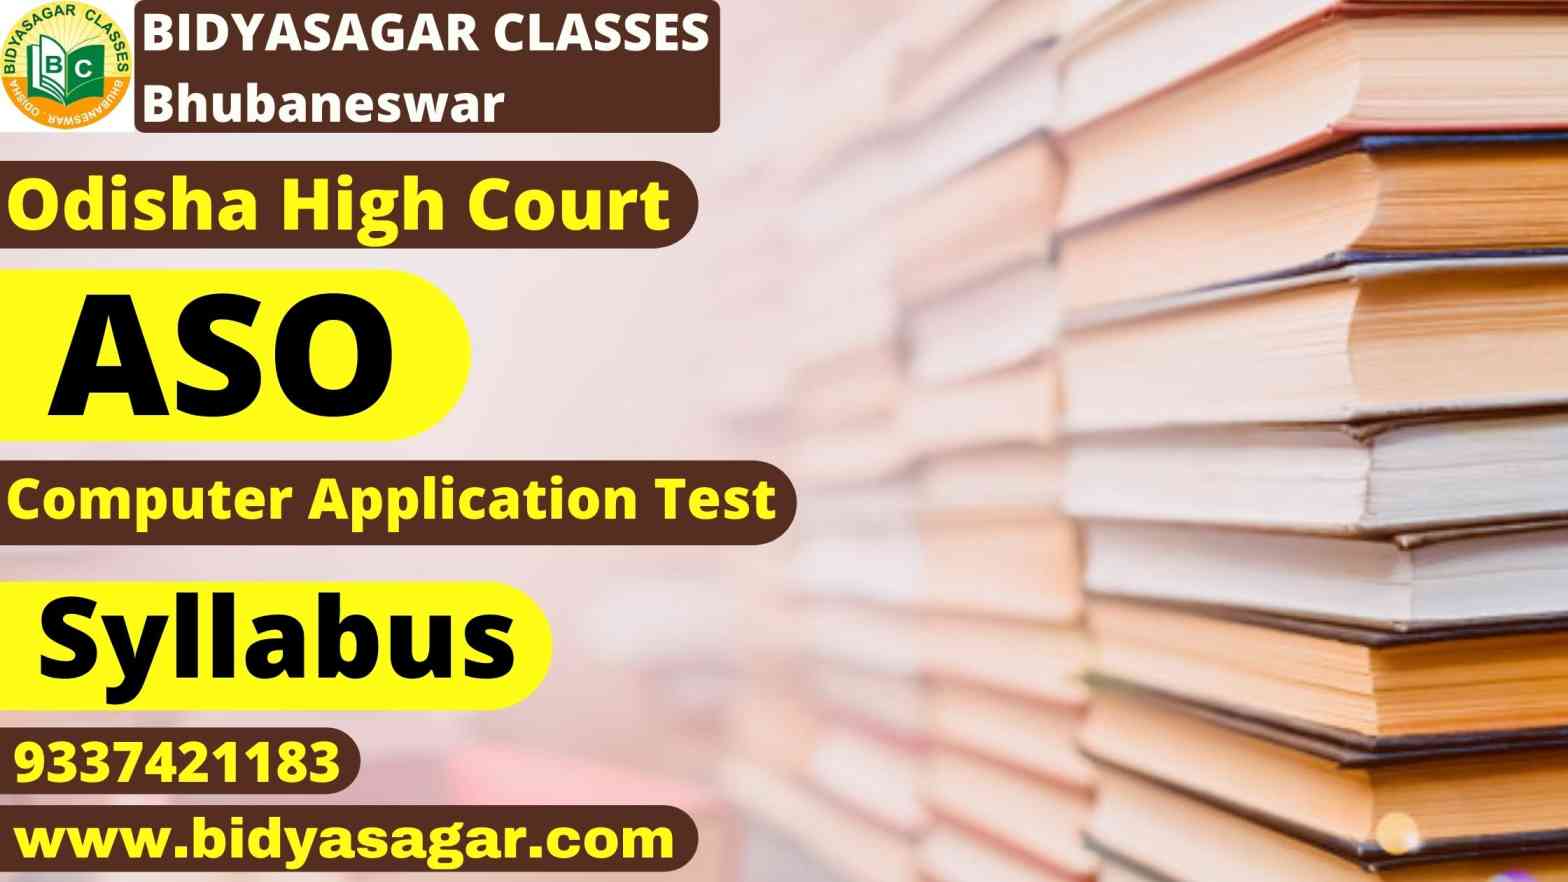 Odisha High Court ASO Computer Application Test Syllabus